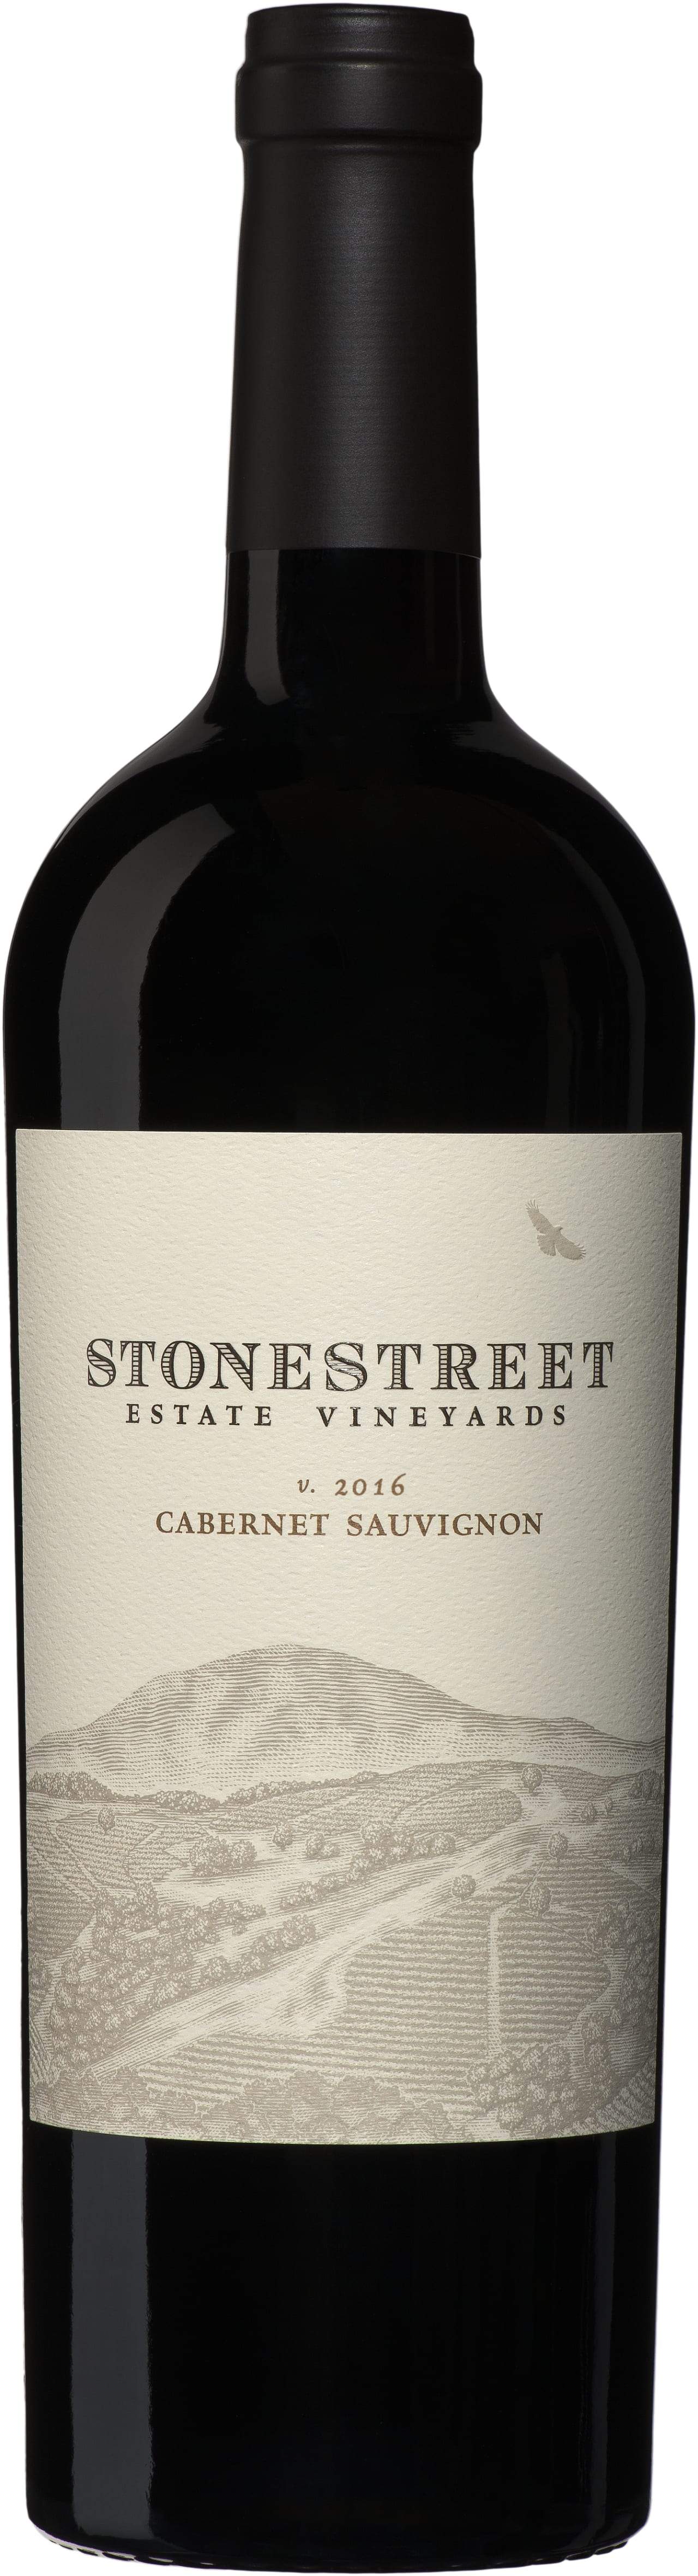 Stonestreet Cabernet Sauvignon 2016